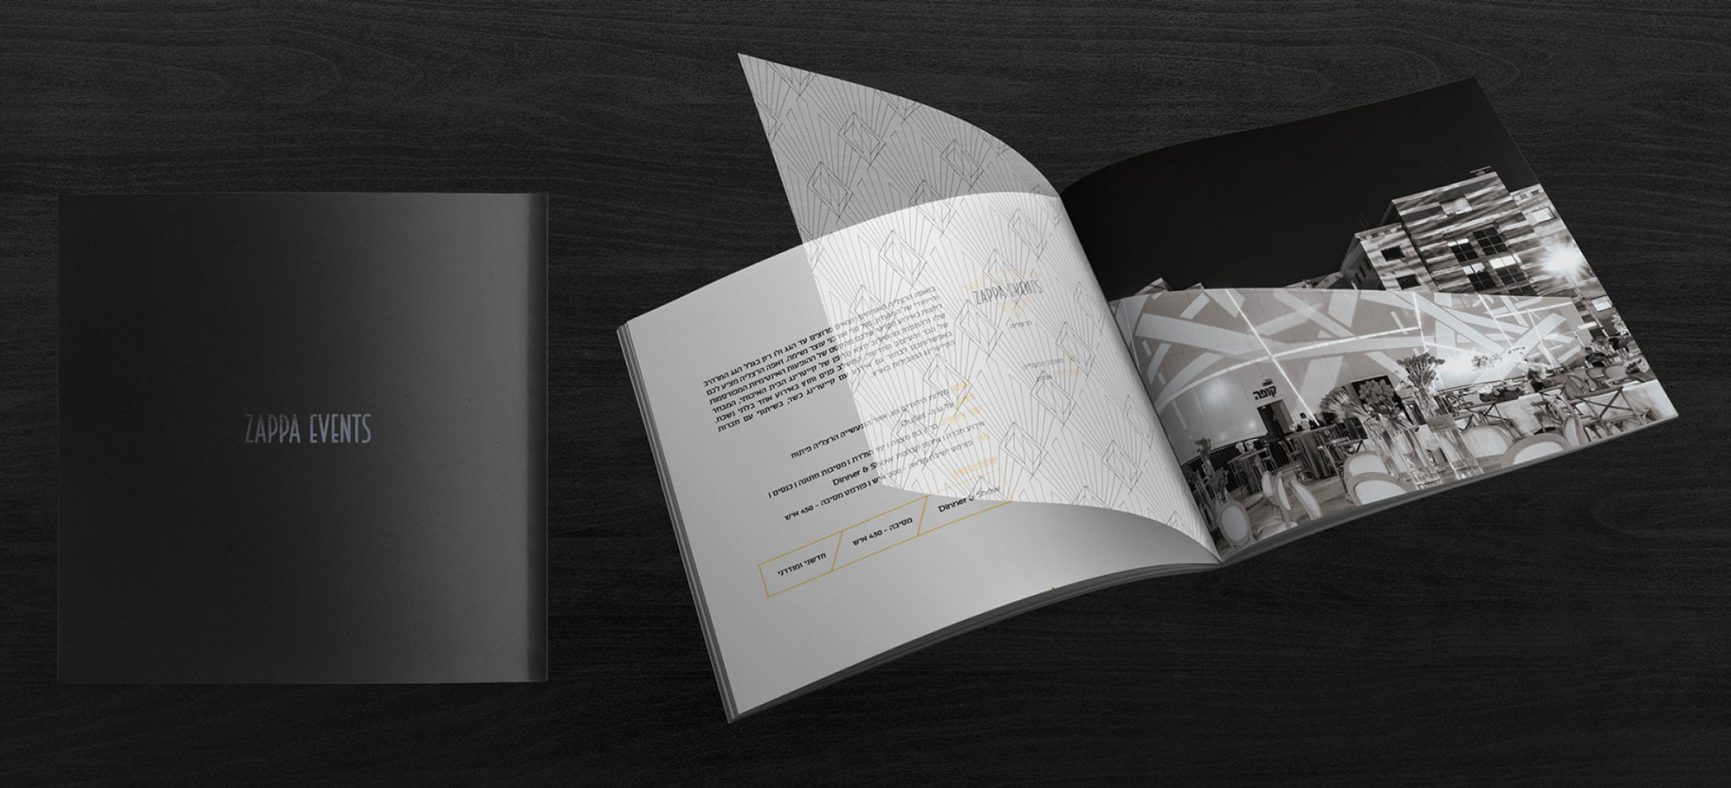 H2oPureDesign_zappa_events_book_website